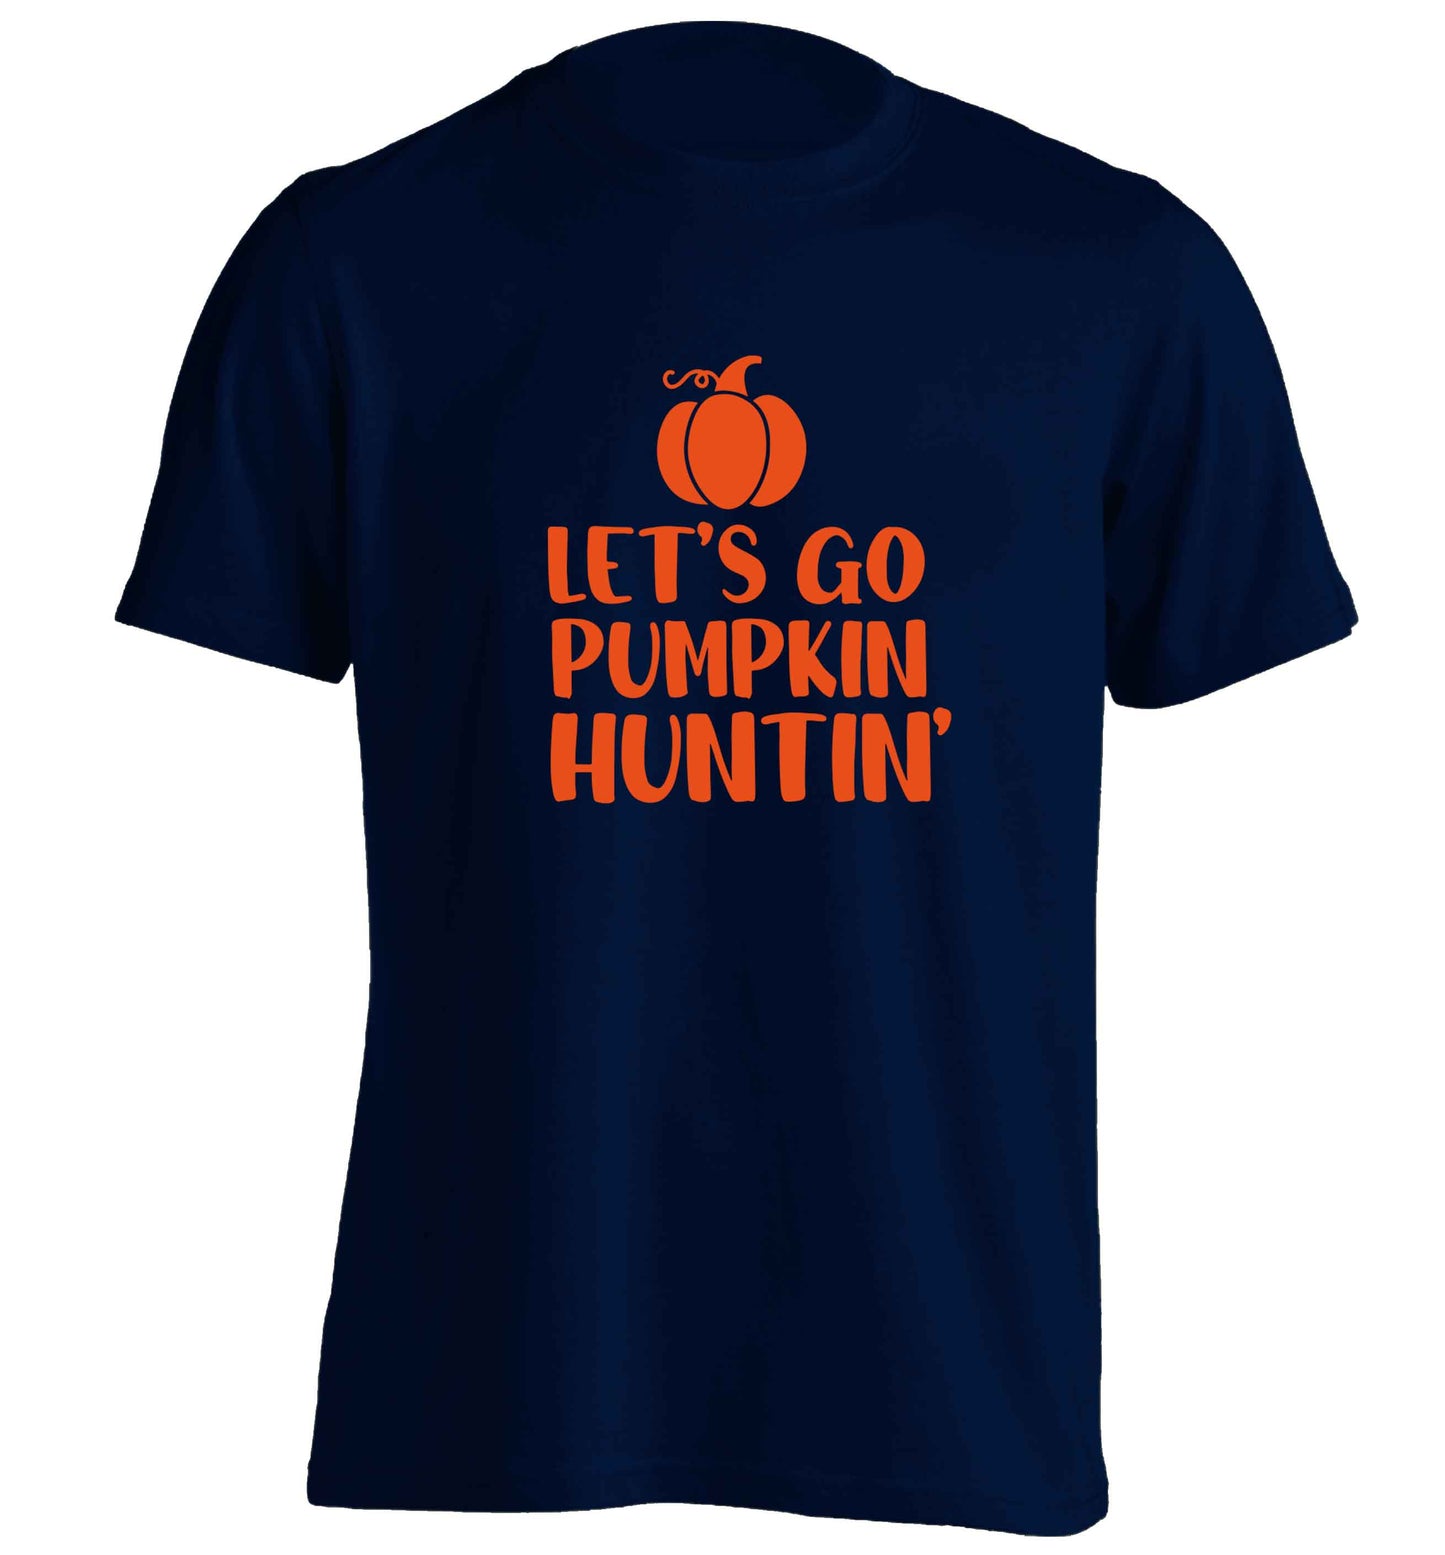 Let's go Pumpkin Huntin'adults unisex navy Tshirt 2XL